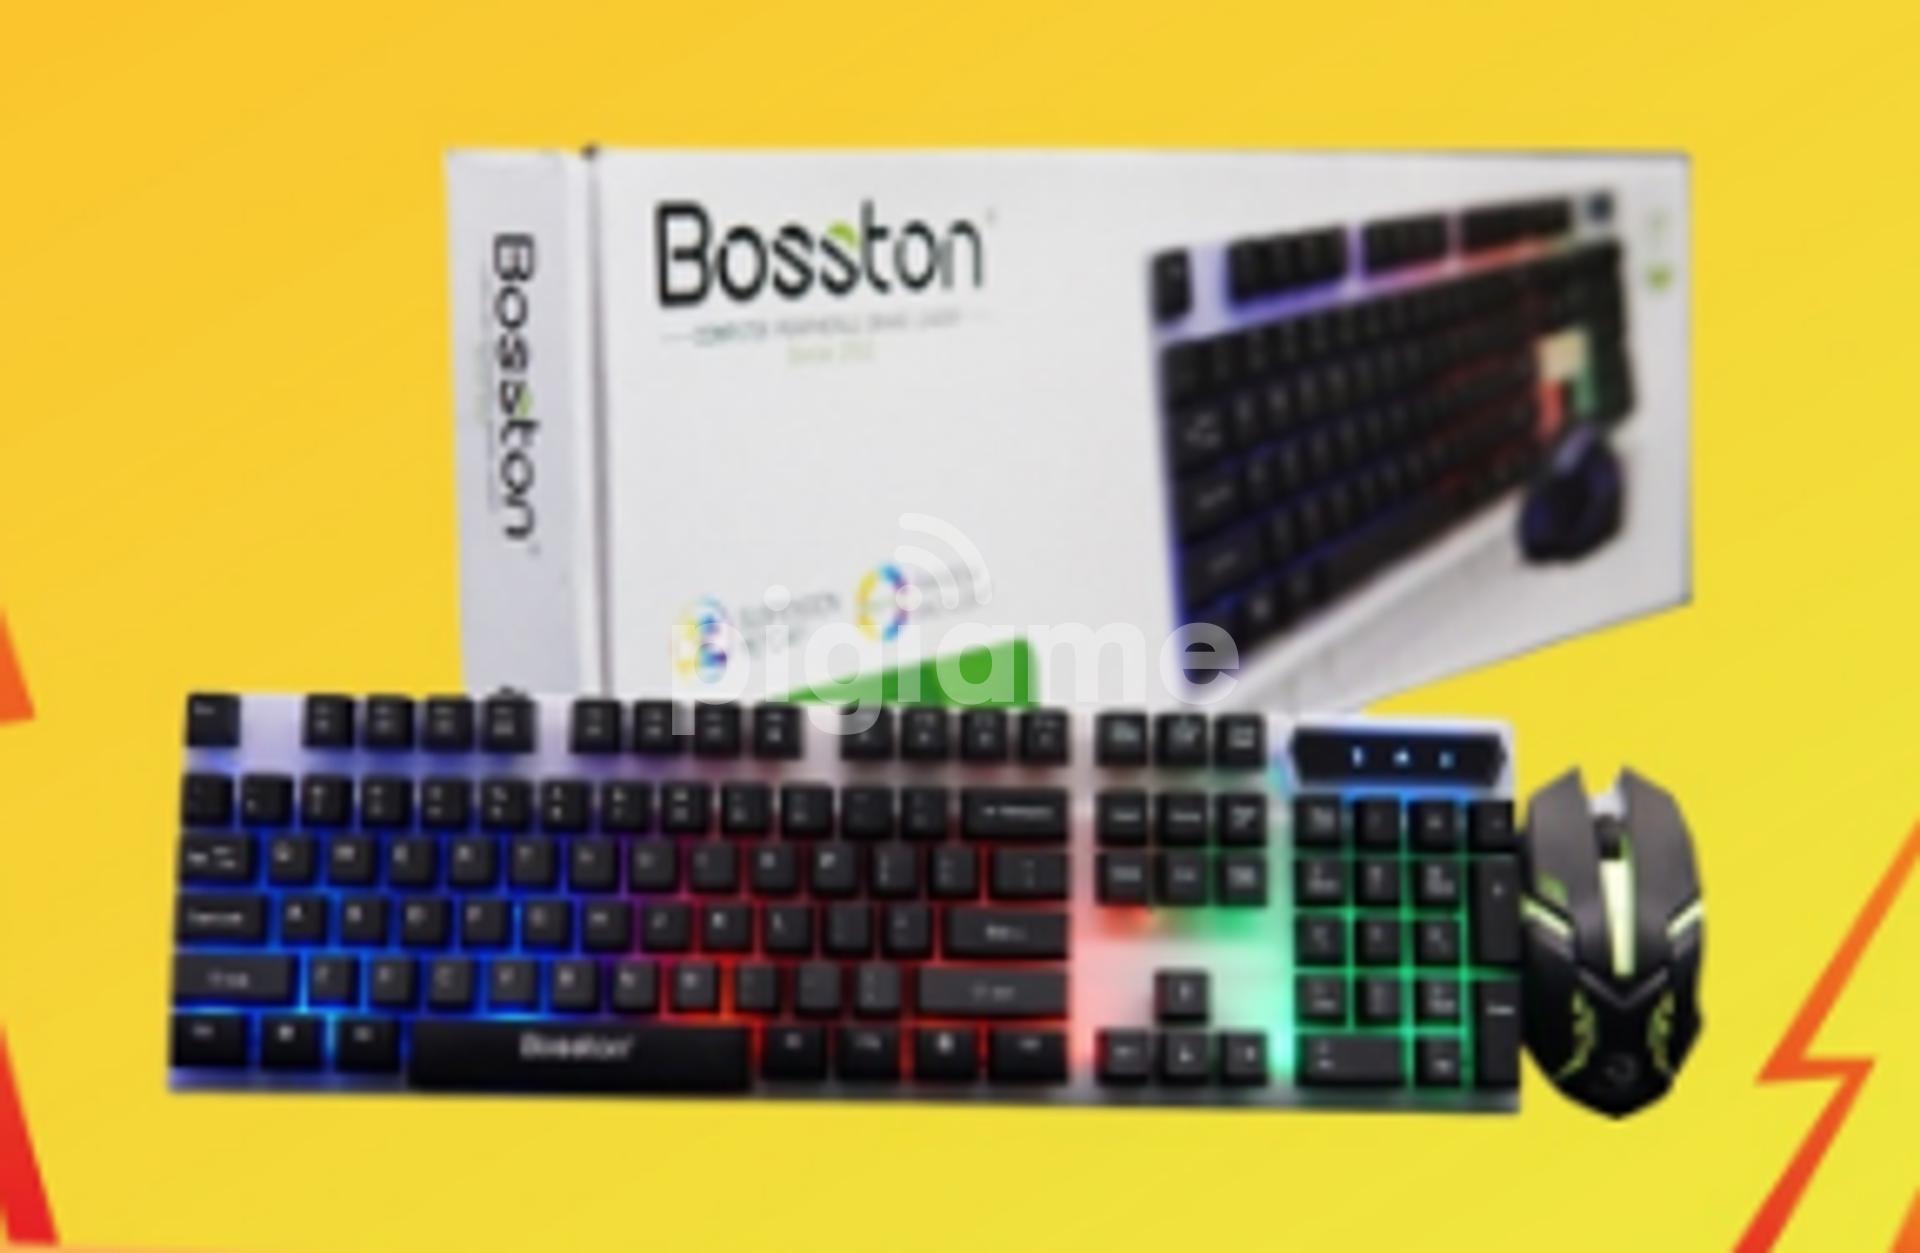 Bosston 8310 Combo Keyboard & Mouse. in Nairobi CBD | PigiaMe